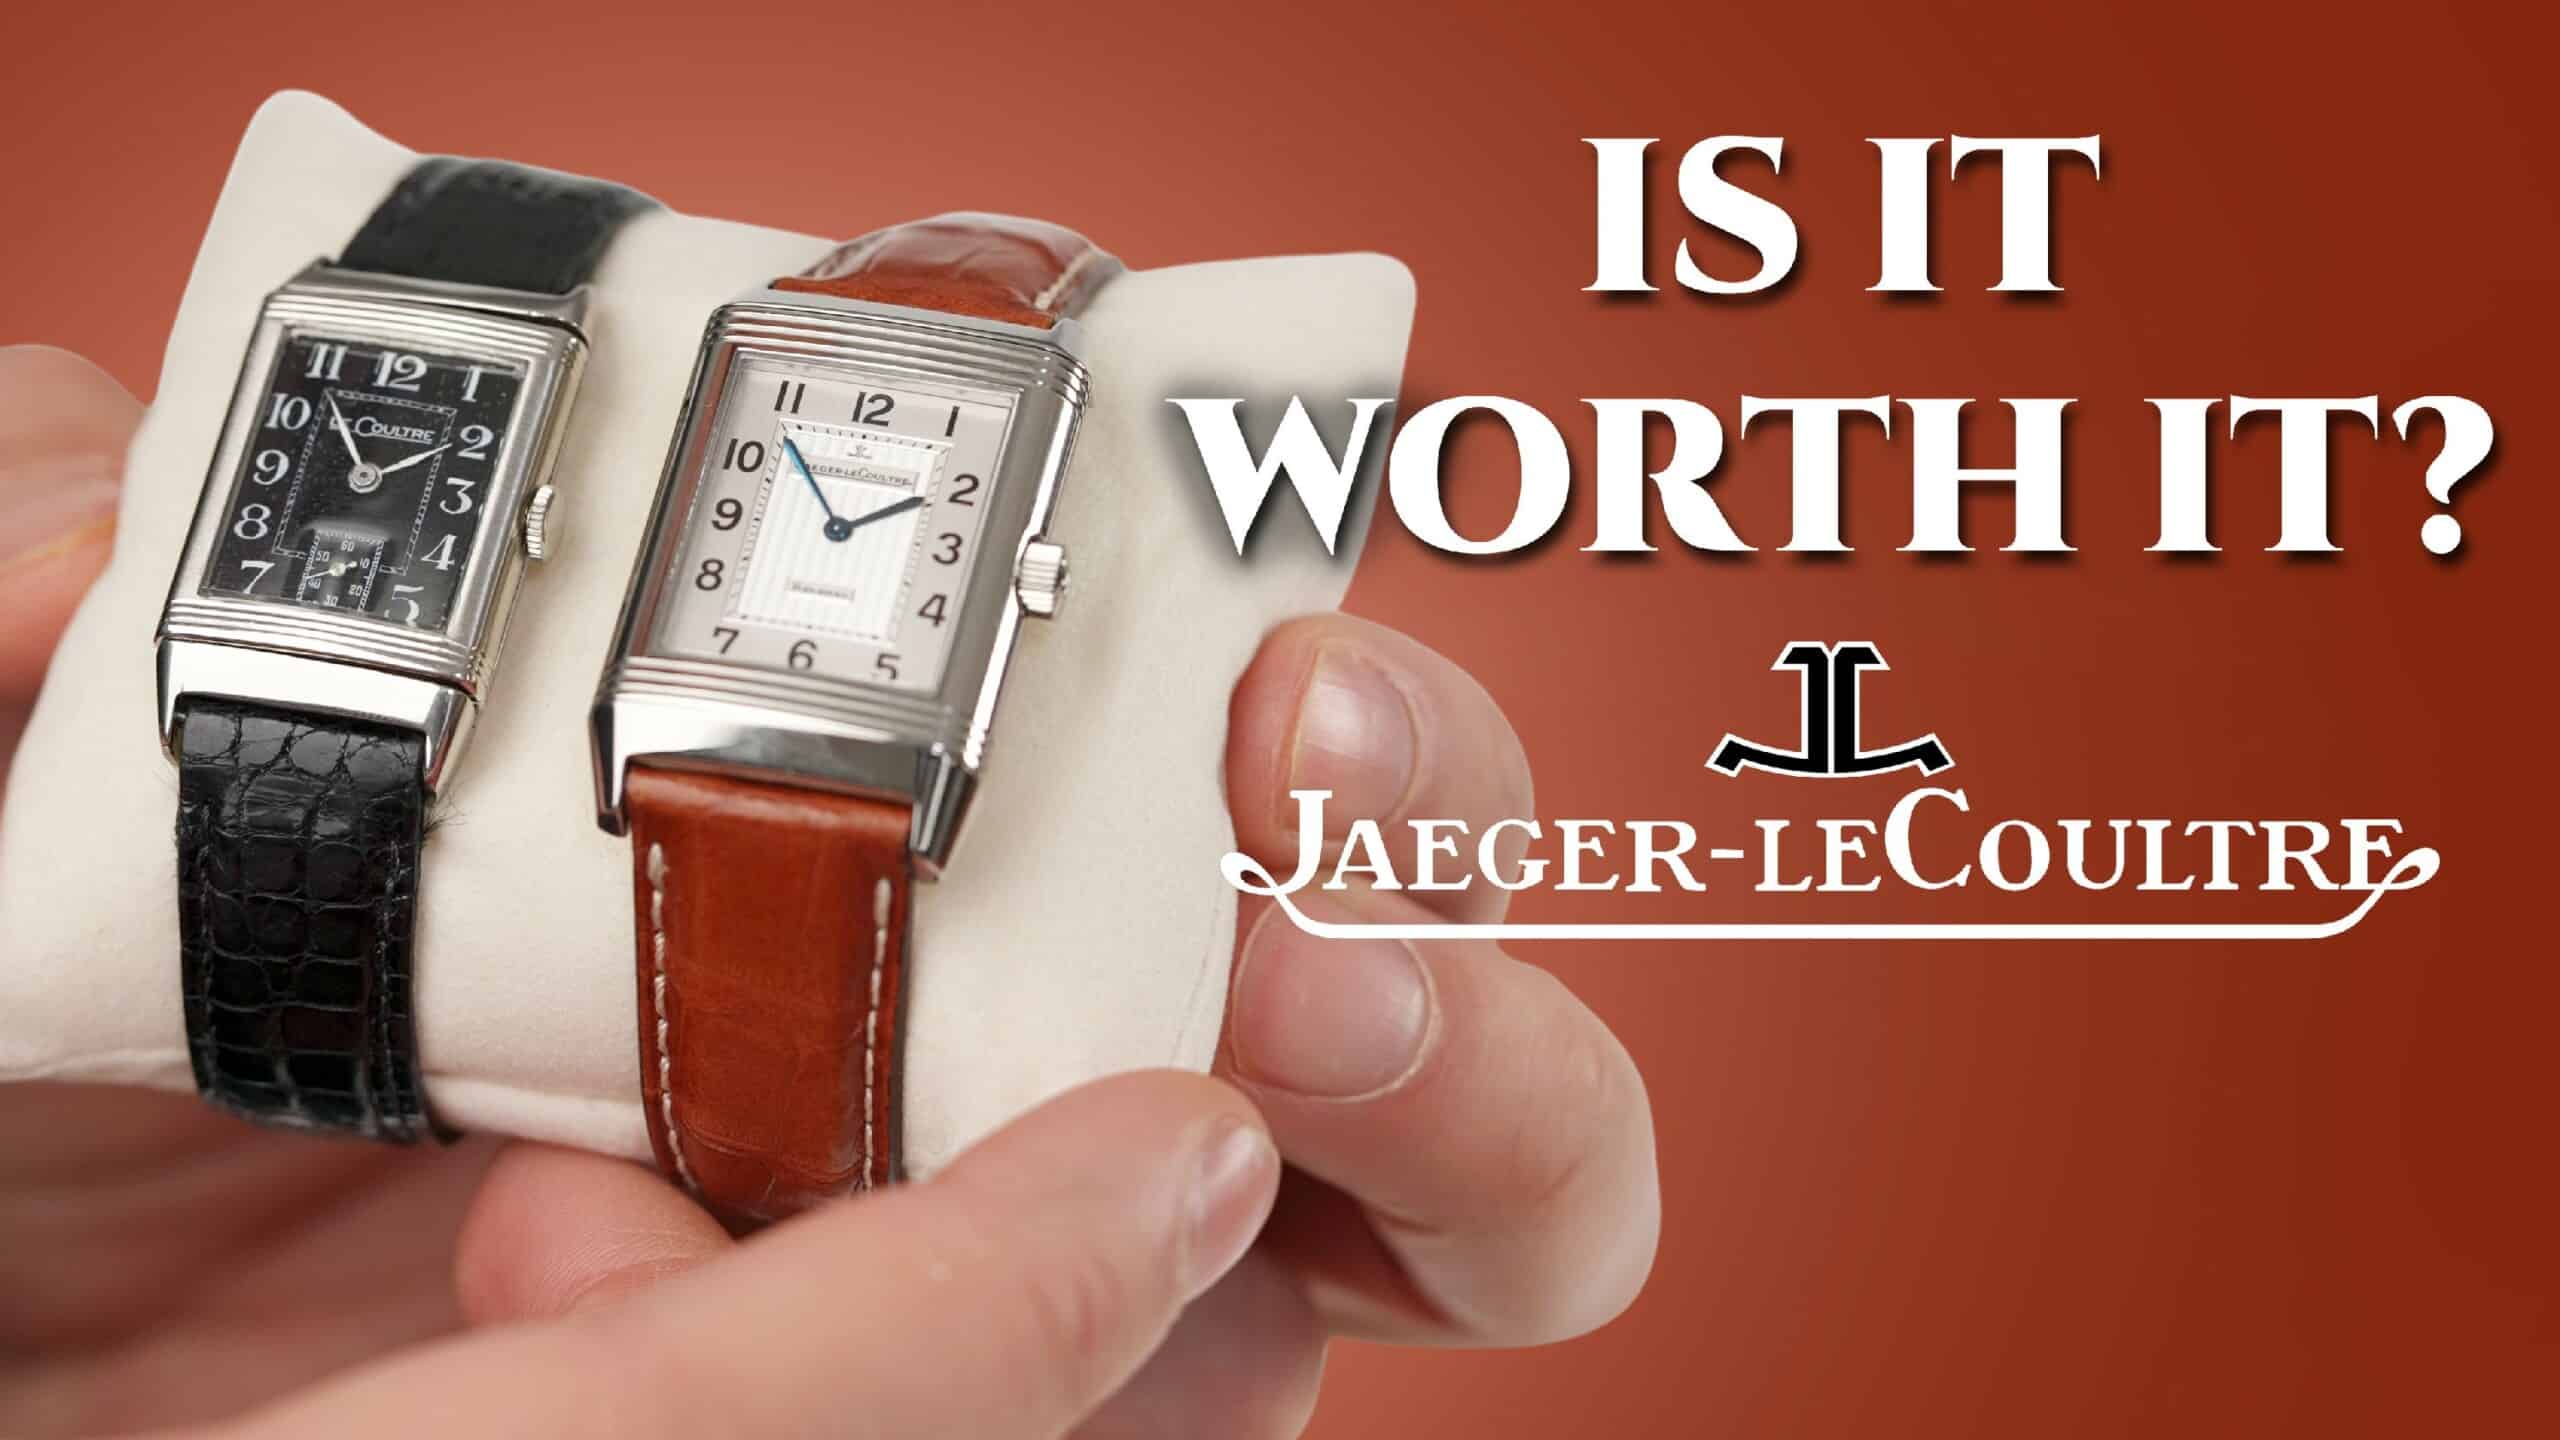 2023 Luxury Fresh Watch Women's Fashion Casual Belt Watch Simple Ladies  Small Dial Quartz Clock Formal Watch - AliExpress